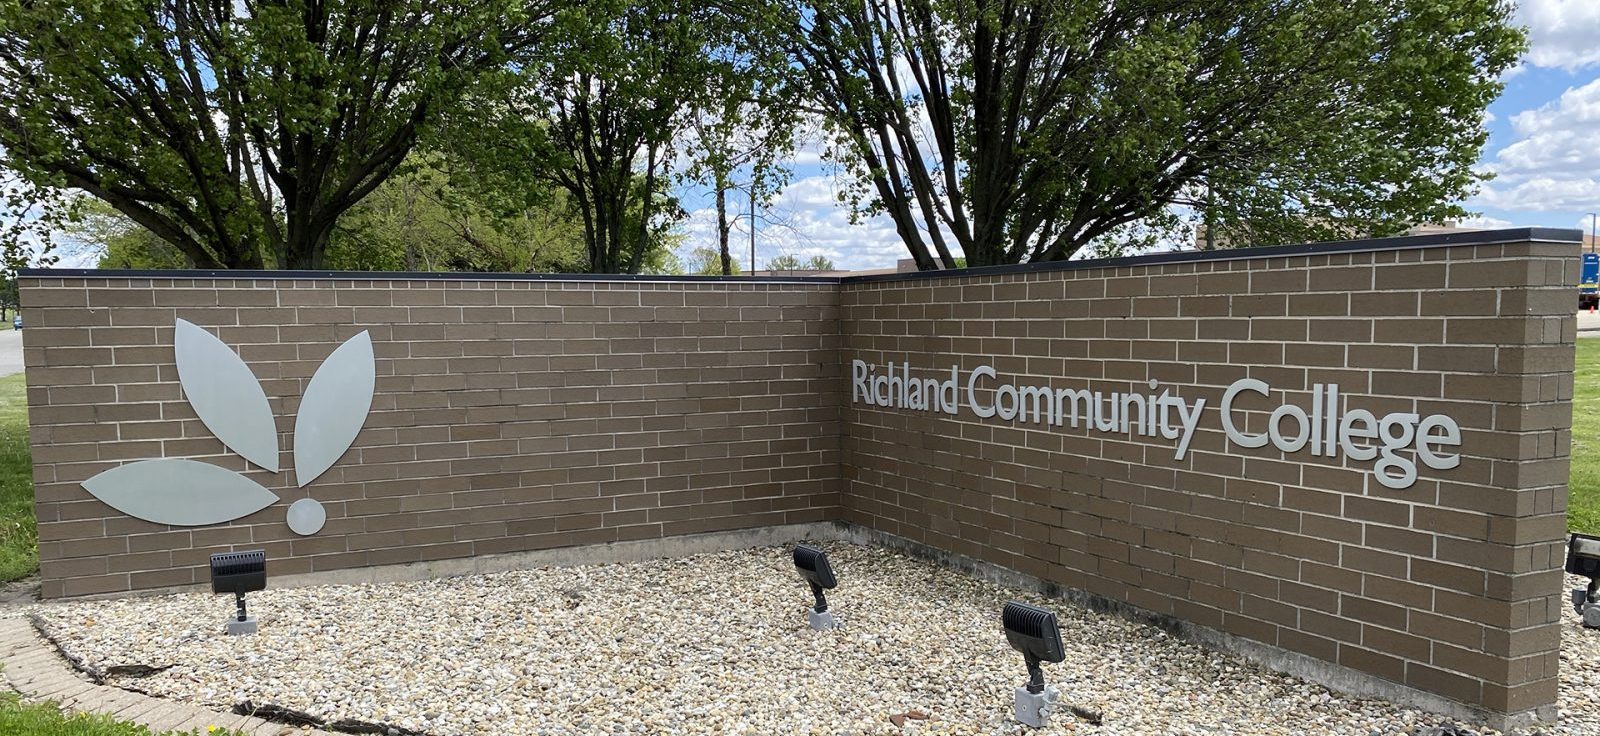 Richland Campus Sign aspect ratio 100 46